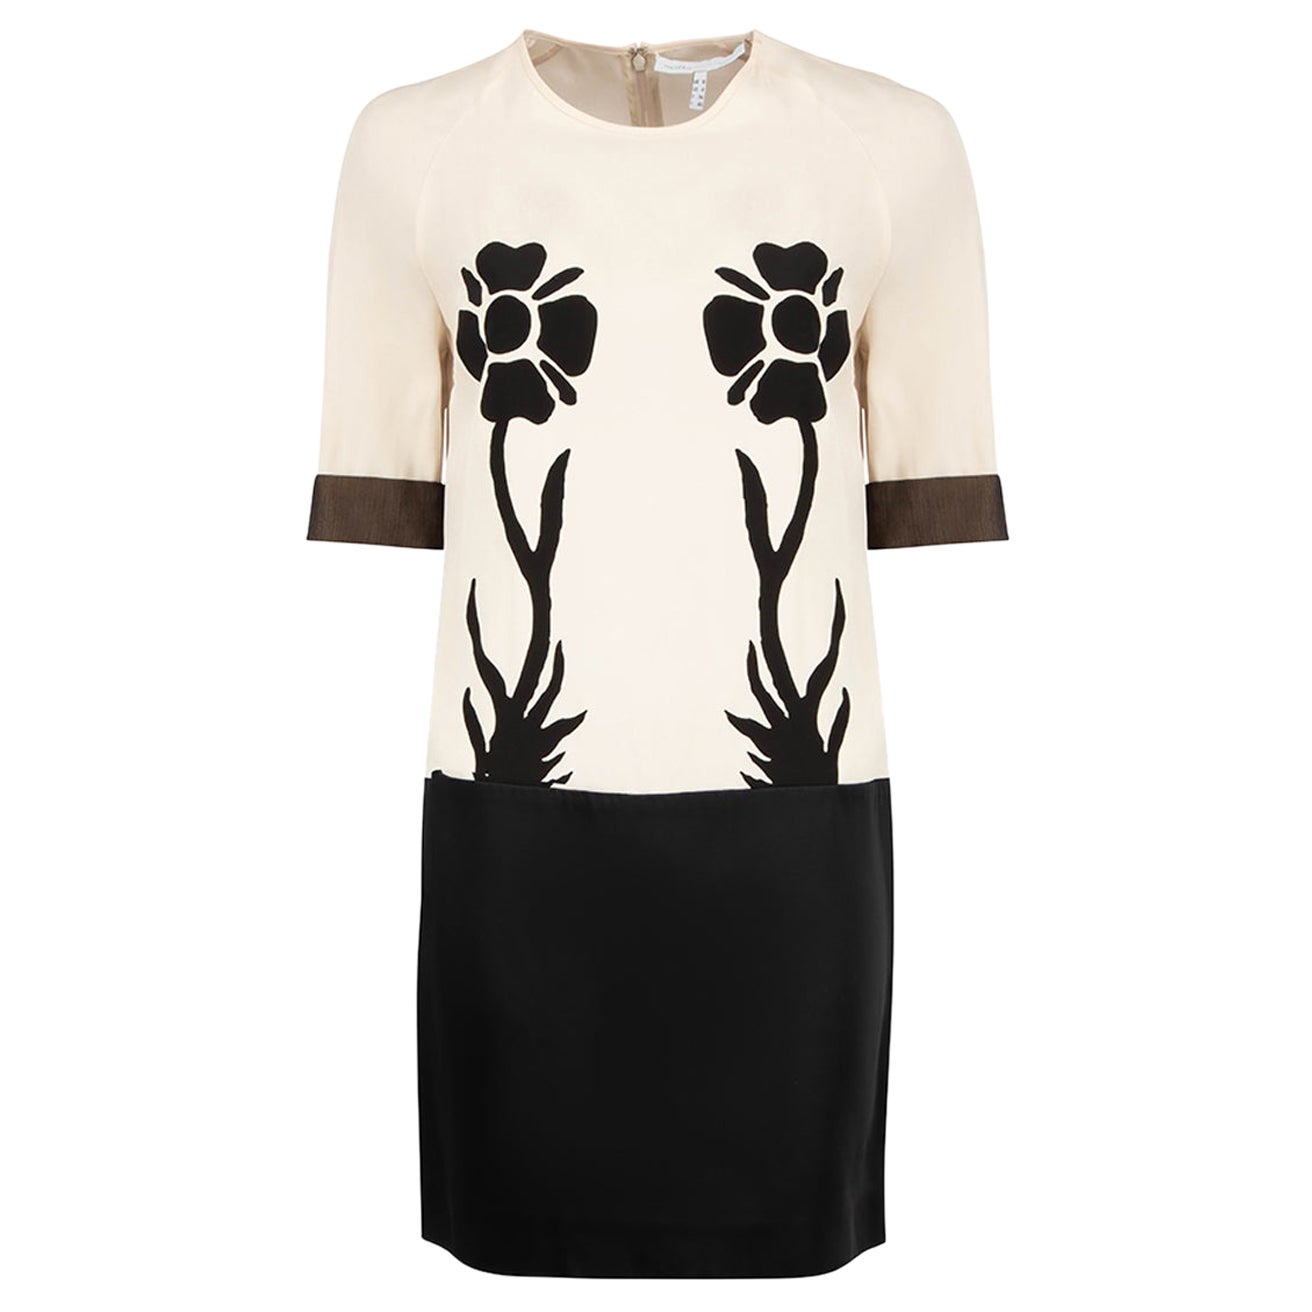 Victoria Beckham Beige Silk Floral Applique Dress Size S For Sale